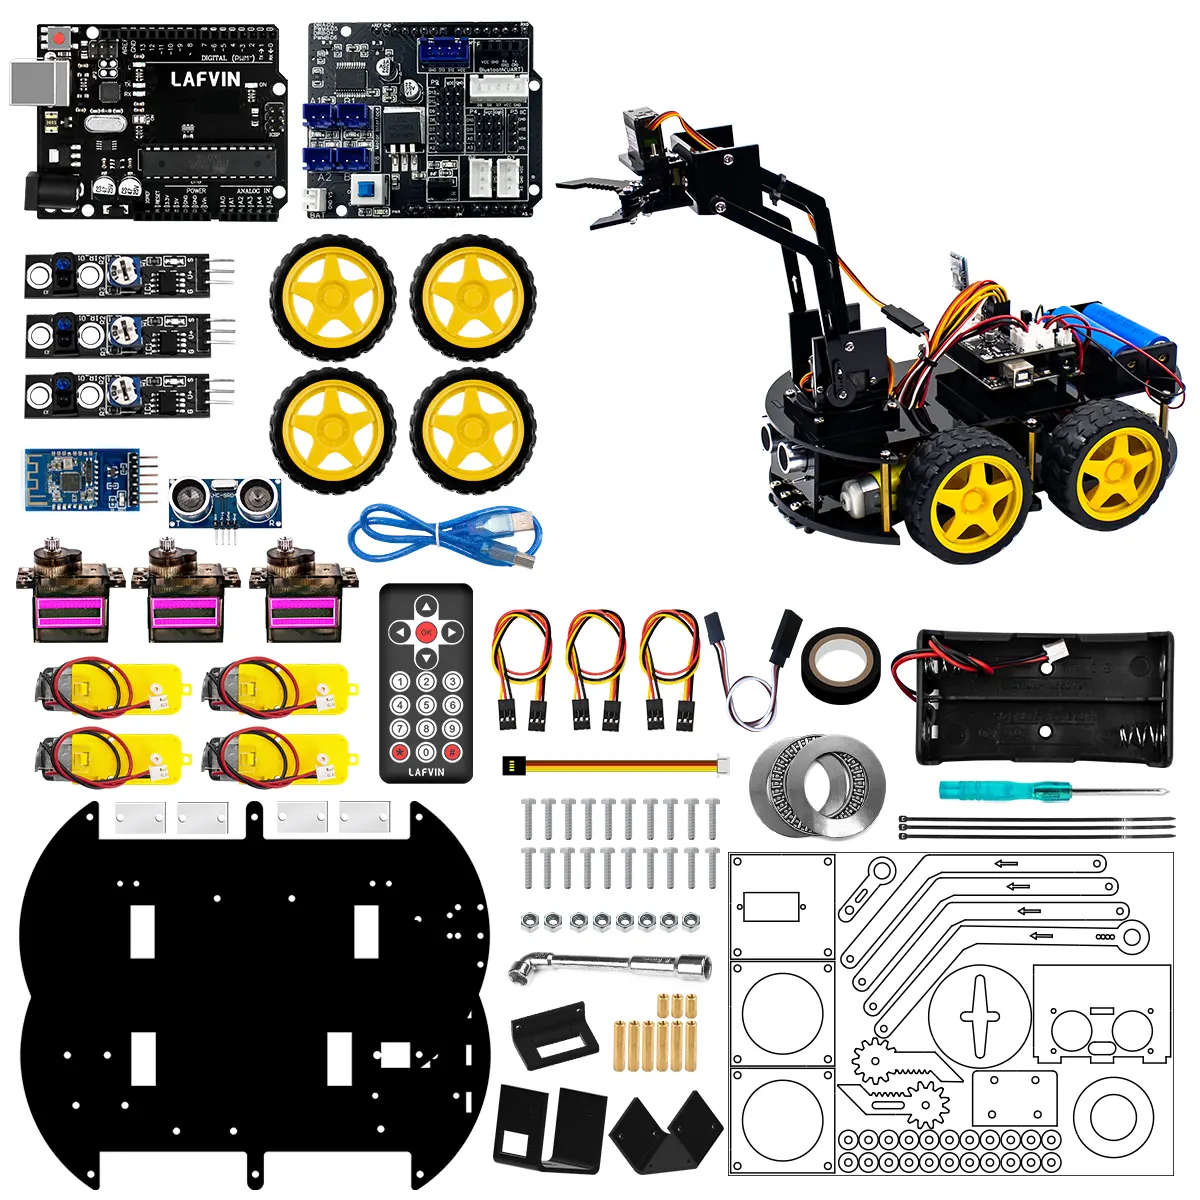 LAFVIN ชุดเครื่องมือเรียนรู้รถยนต์4DOF,ชุดหุ่นยนต์ Arduino สำหรับนักเรียนแขนกล DIY การเขียนโปรแกรม4WD